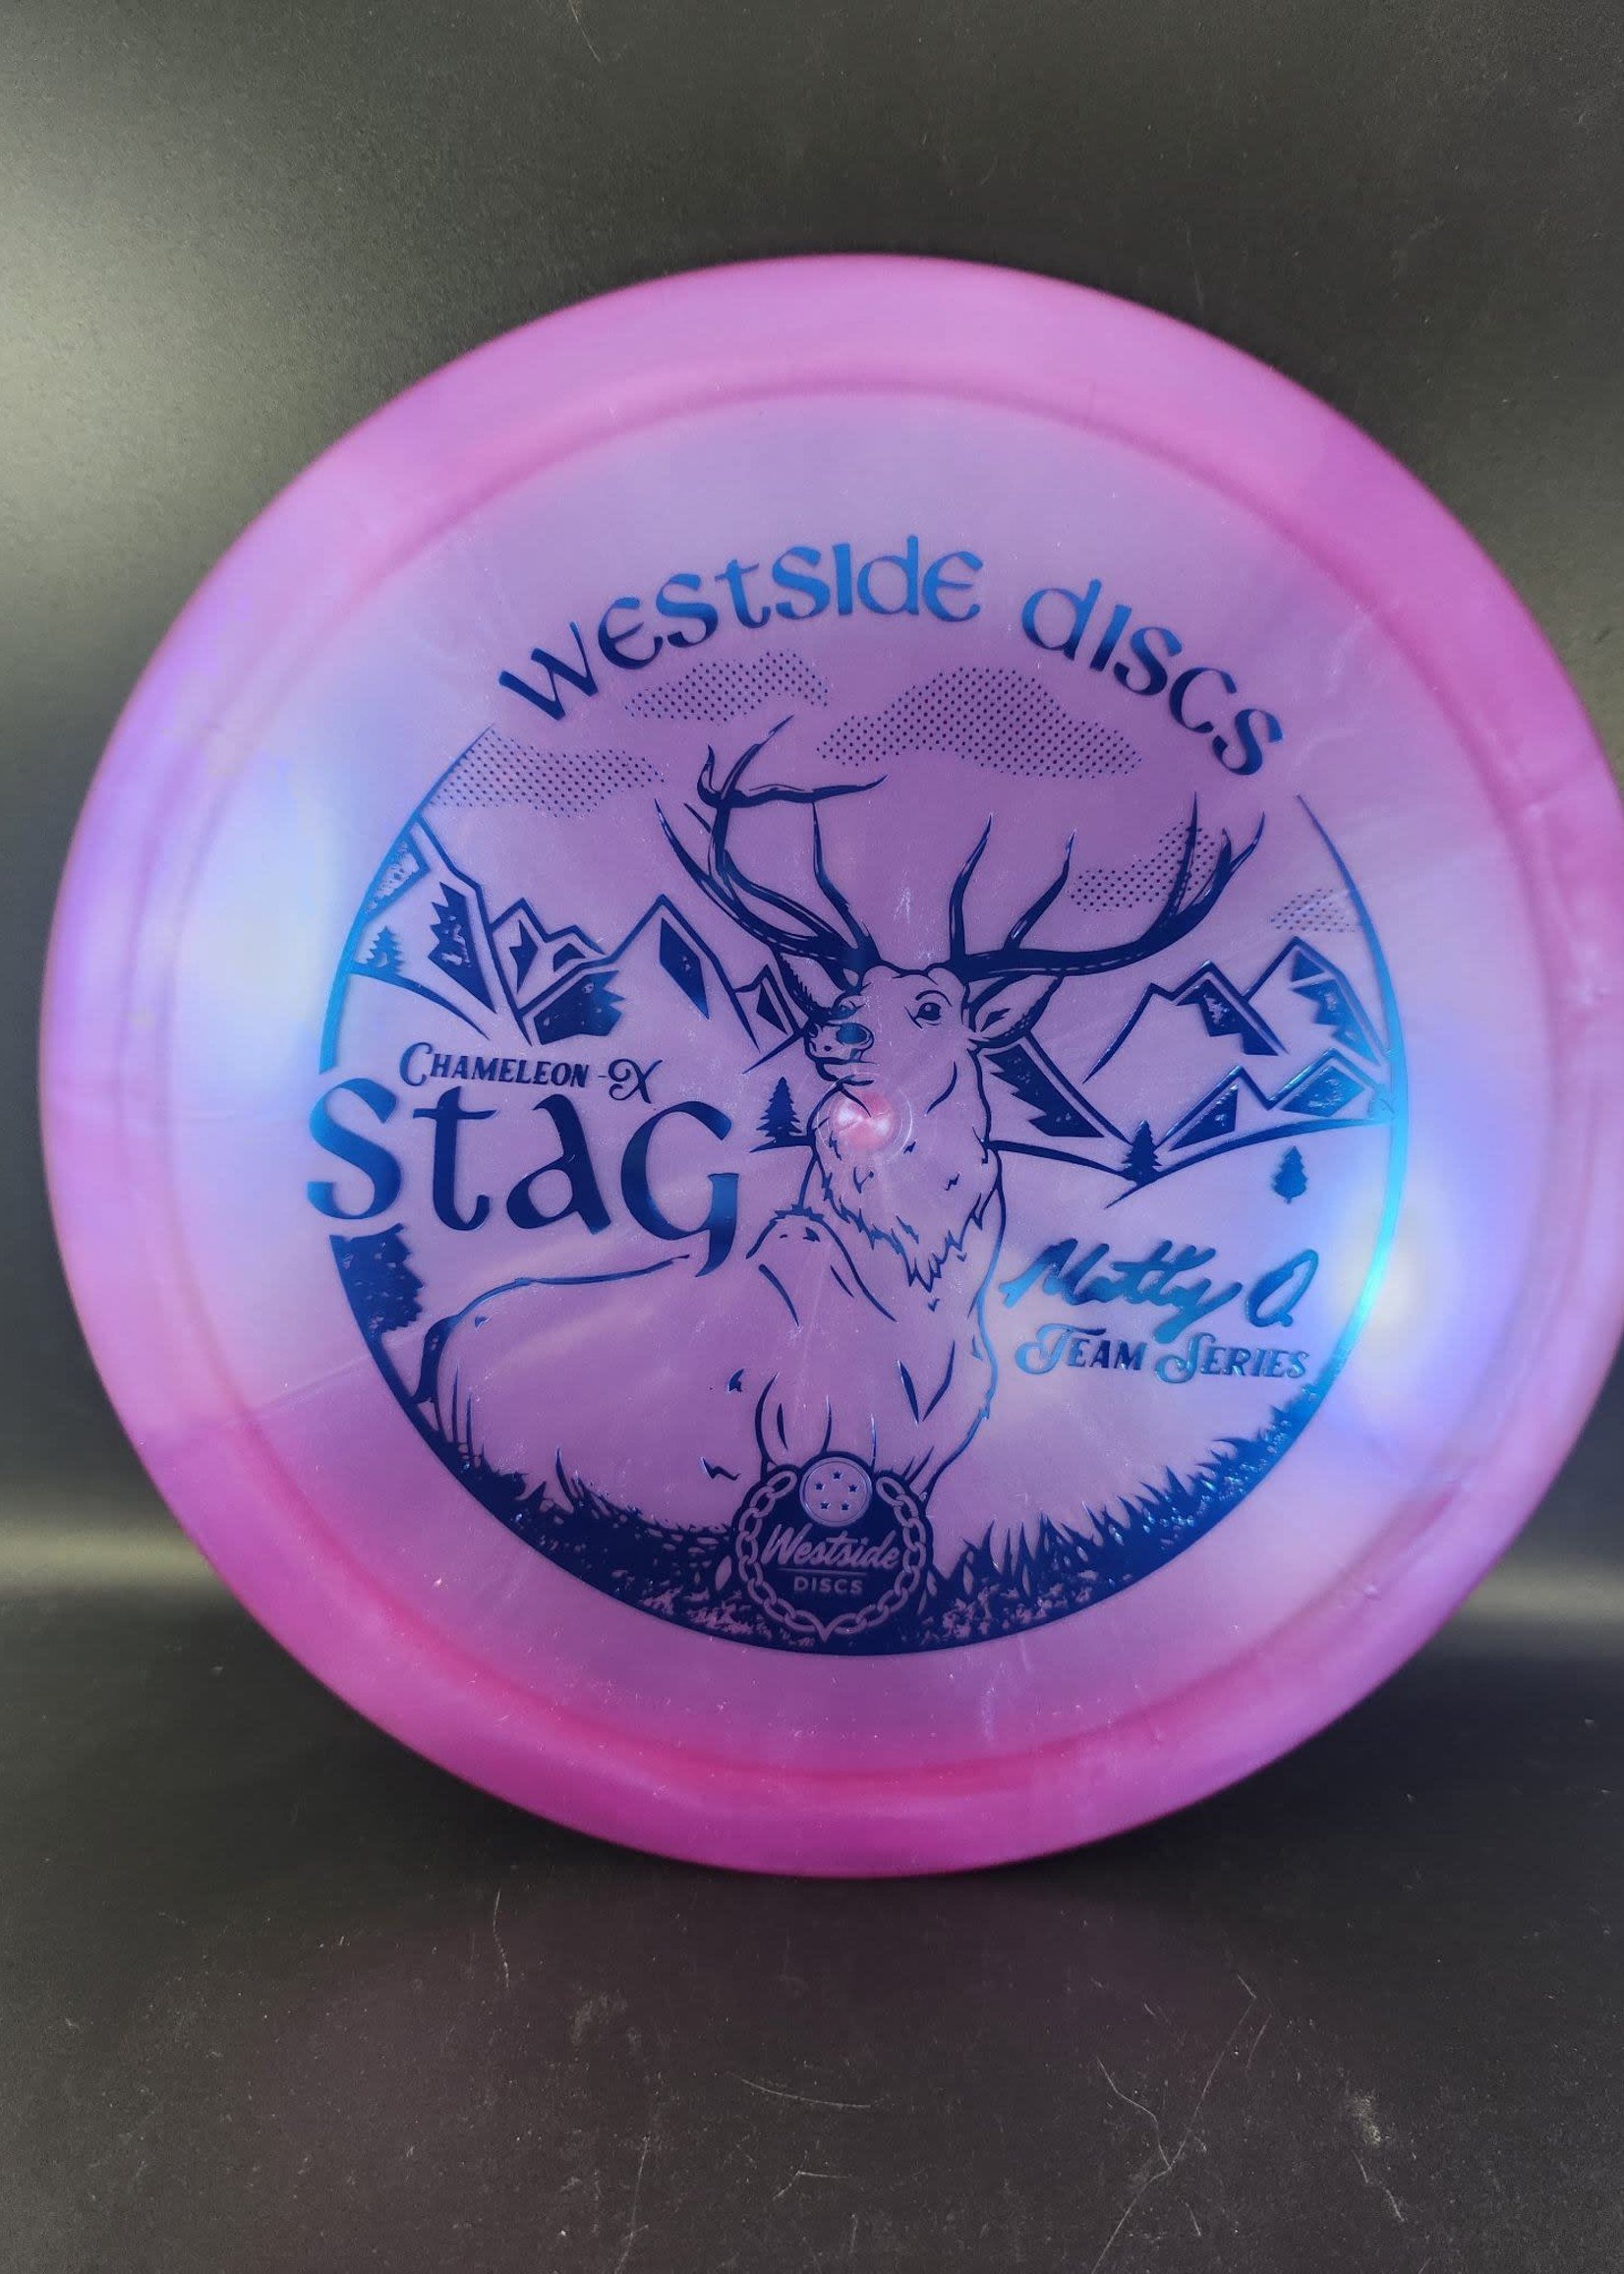 Westside Discs Westside Discs VIP-X Chameleon Stag Matt Orum Team Series